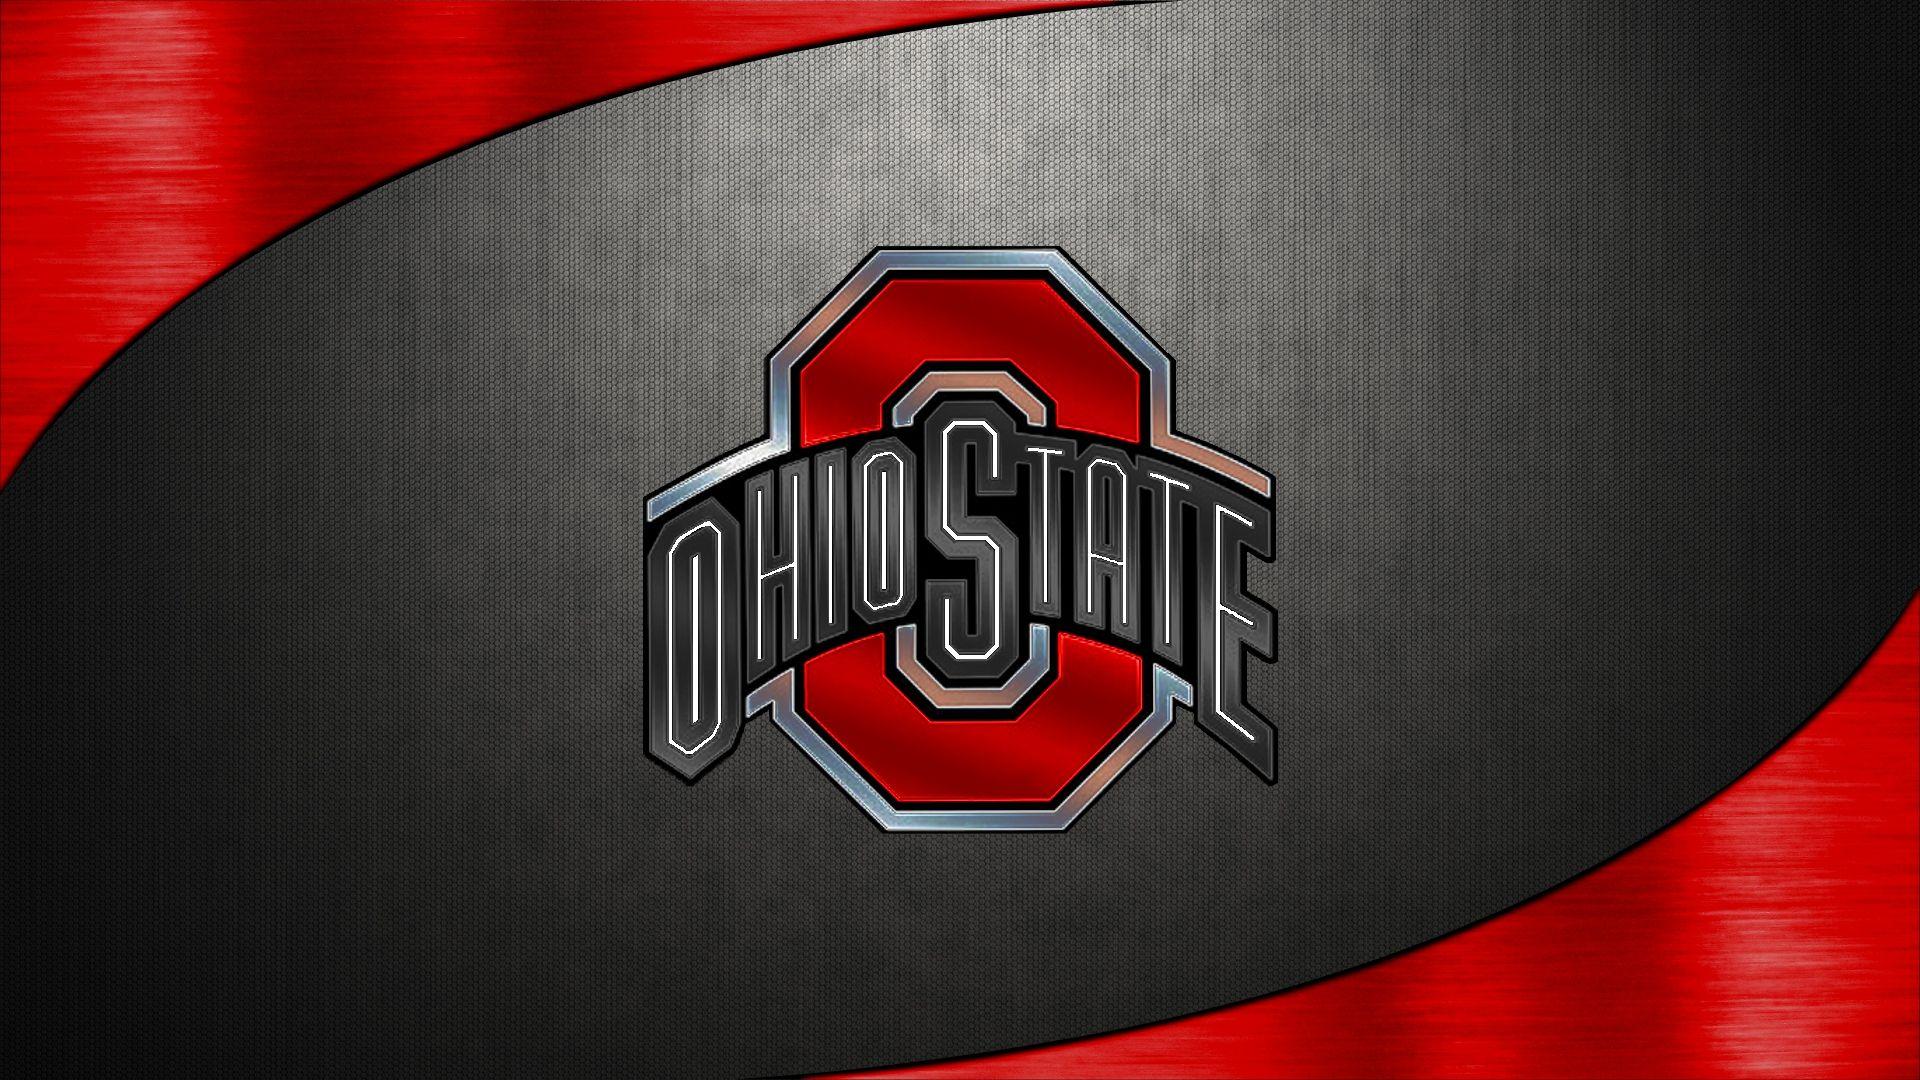 OSU Wallpaper 447 State Football Wallpaper. Ohio State